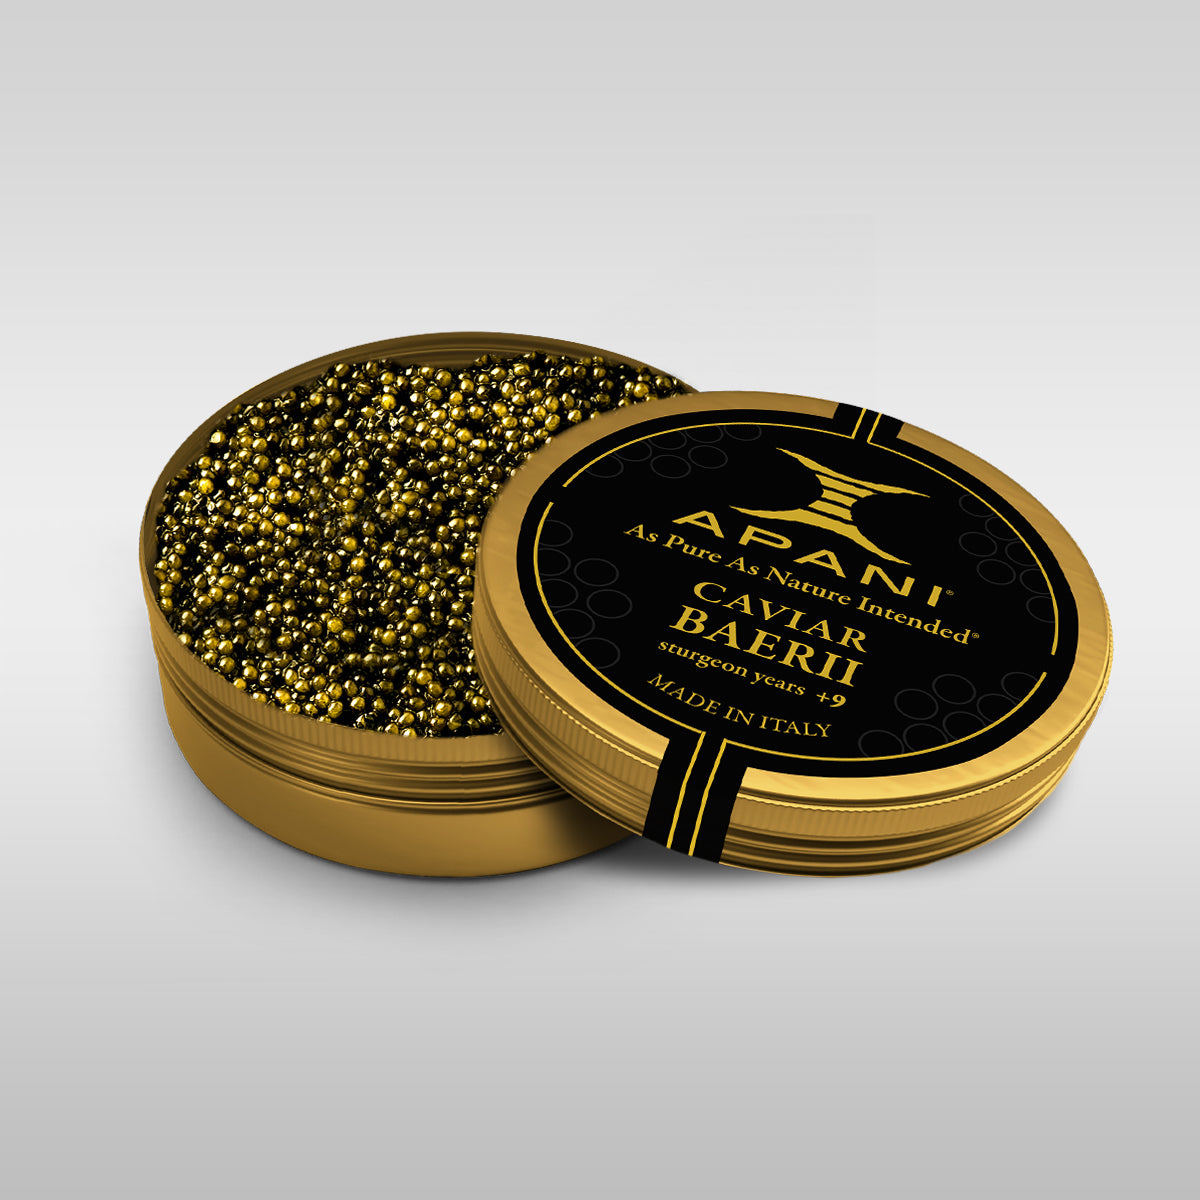 Caviar 250 g : Caviar Baerii origine France - Manufacture Prunier 